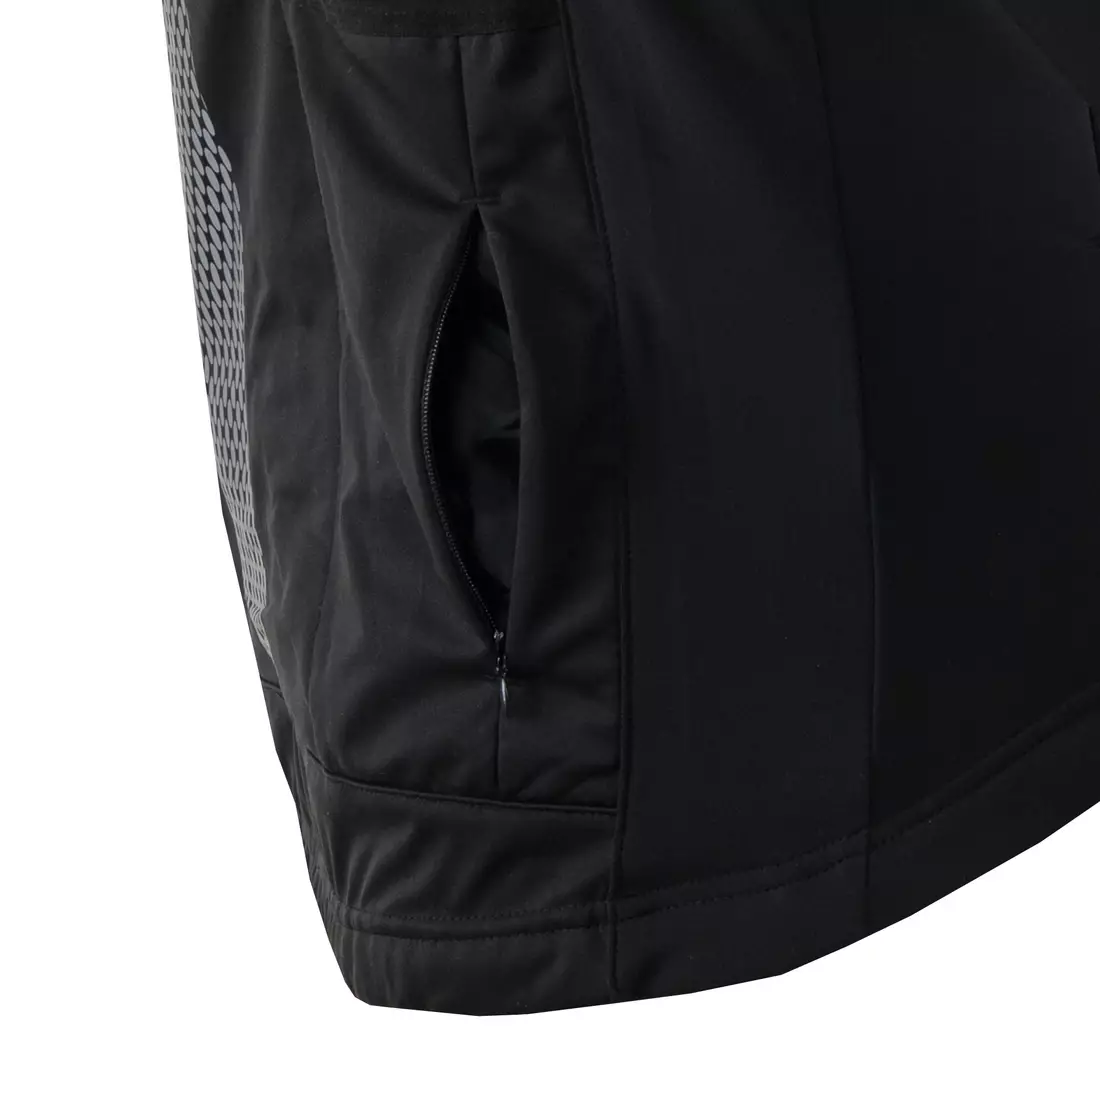 KAYMAQ JWS-004 pánská zimní cyklistická bunda softshell modro-černá